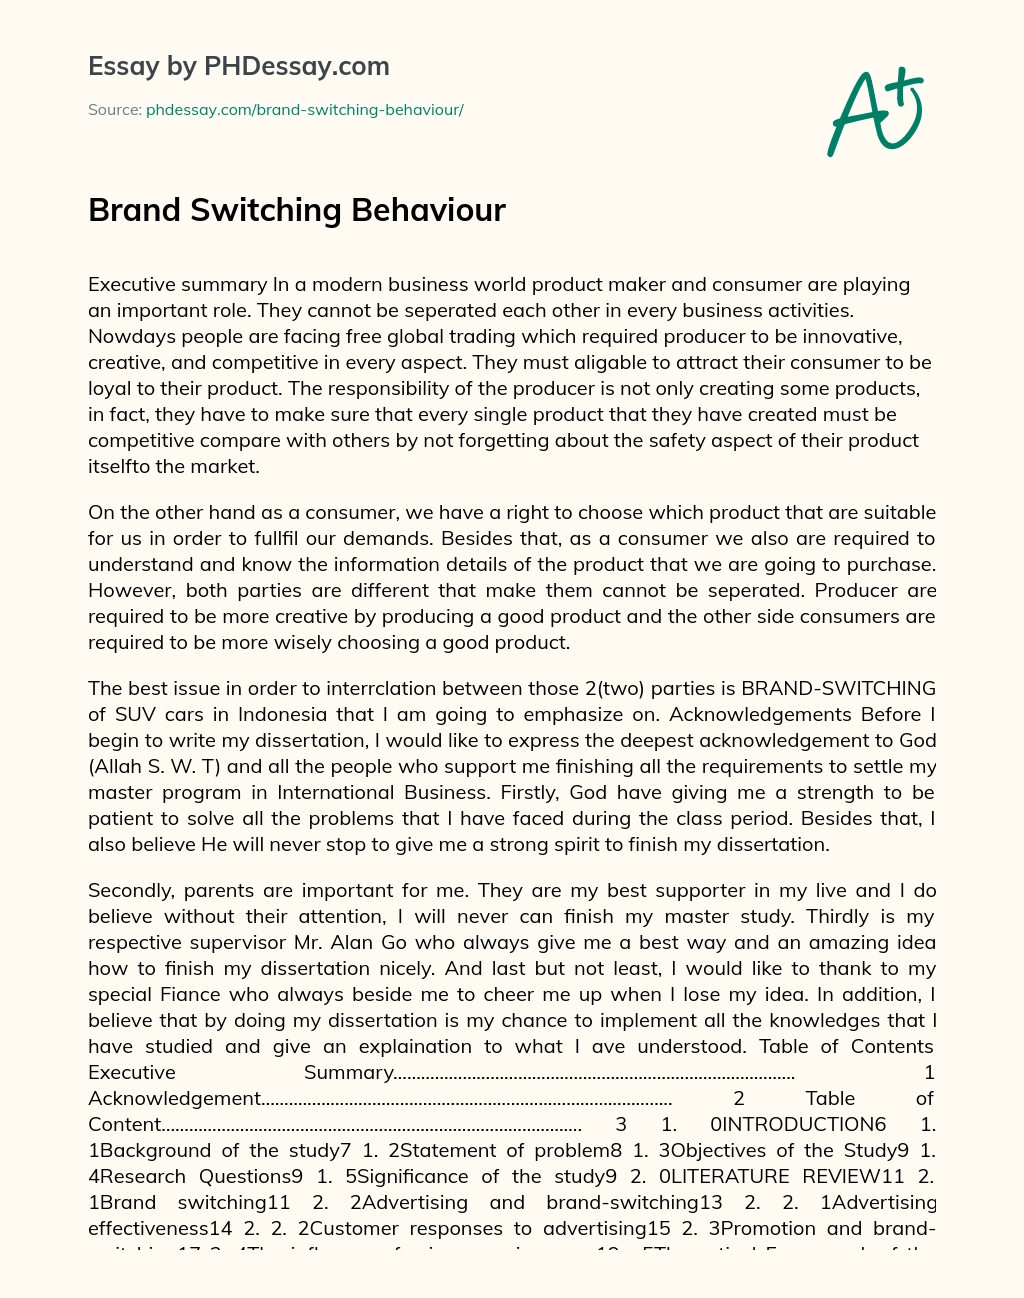 Brand-switching behaviour essay